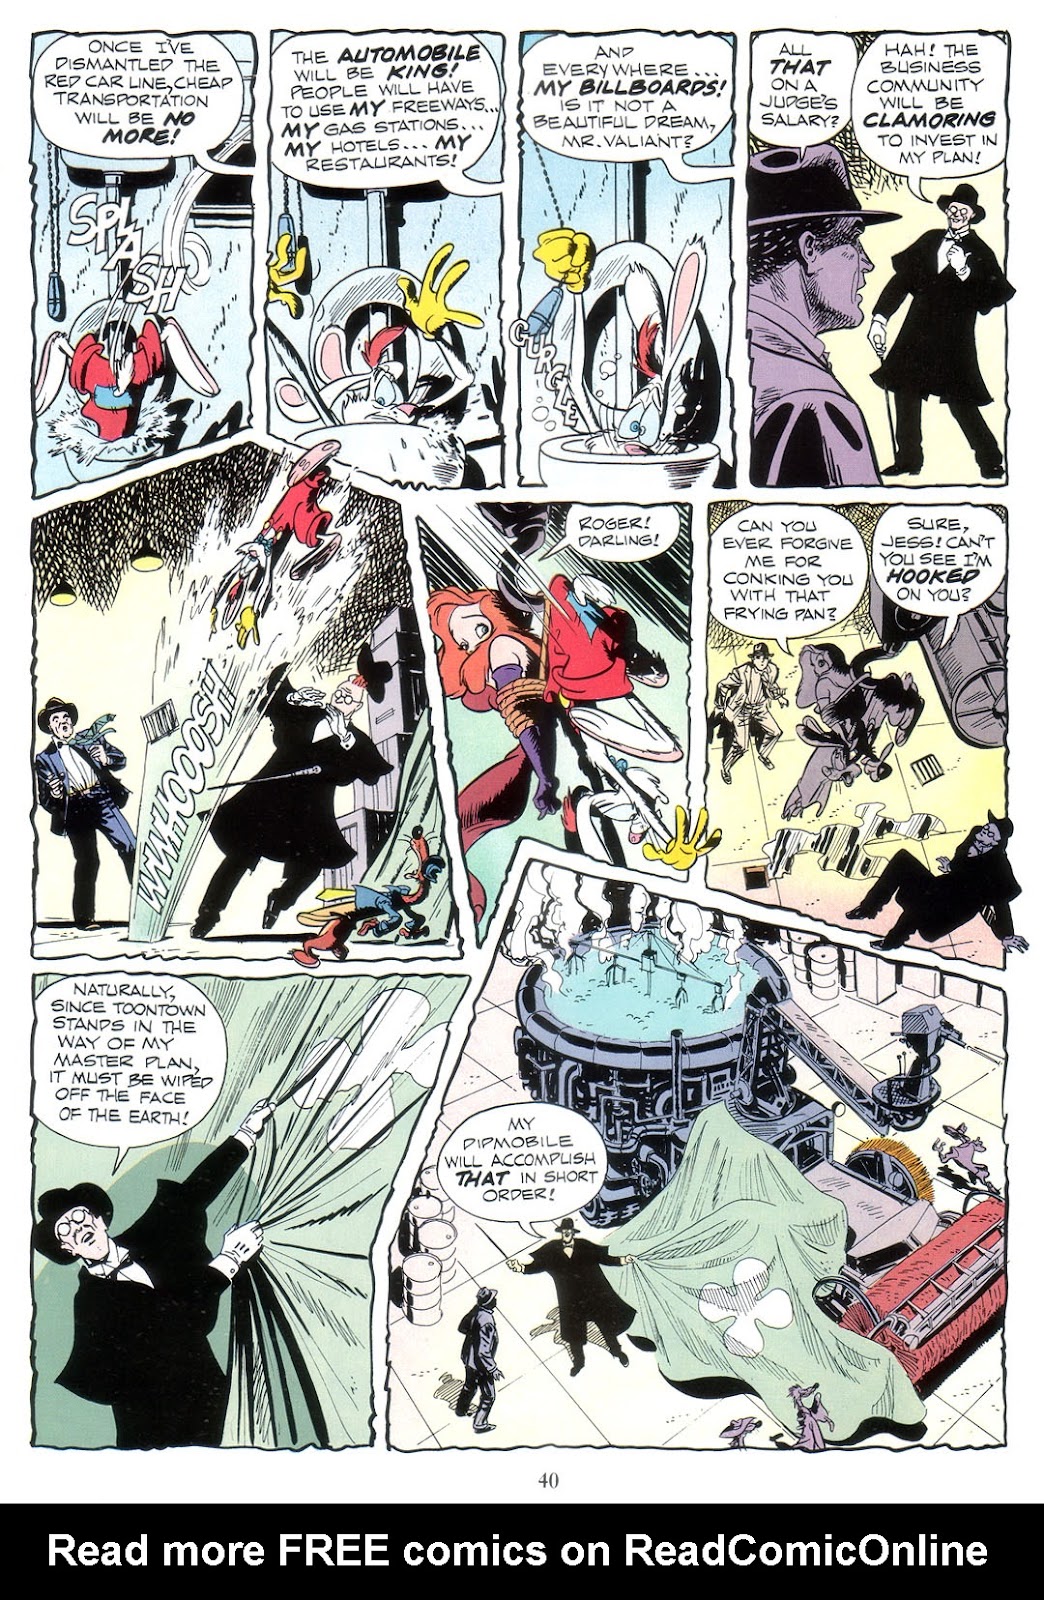 Marvel Graphic Novel issue 41 - Who Framed Roger Rabbit - Page 42